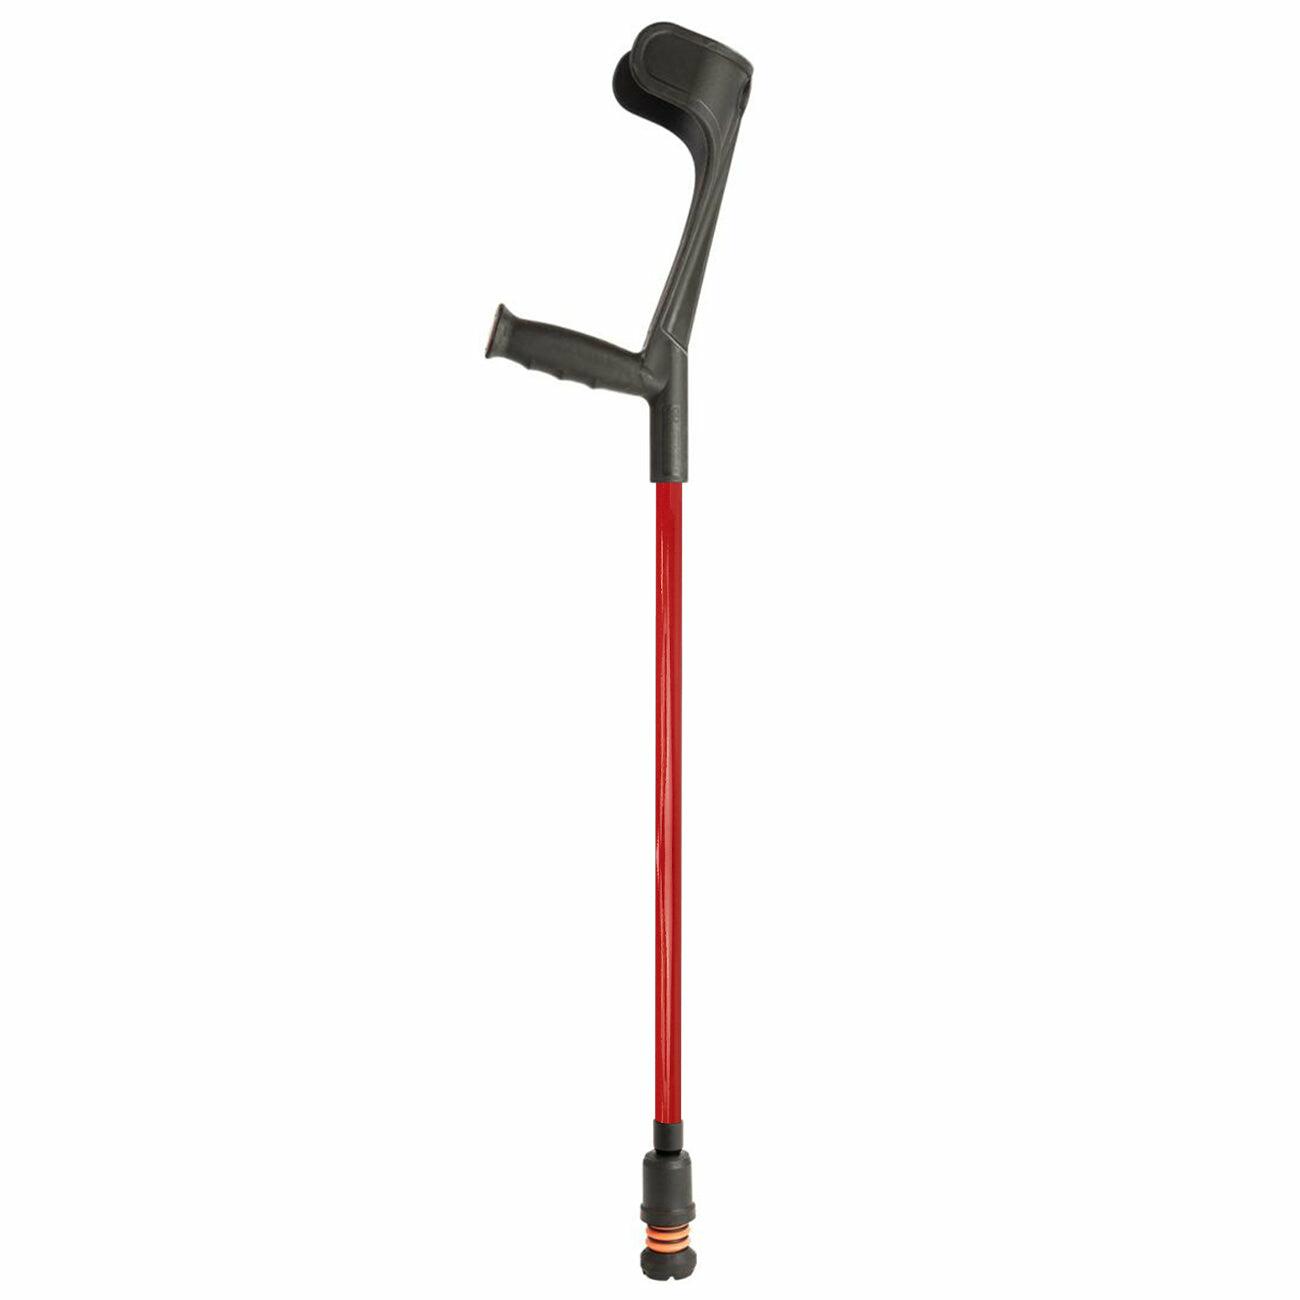 A single red Flexyfoot Soft Grip Open Cuff Crutch